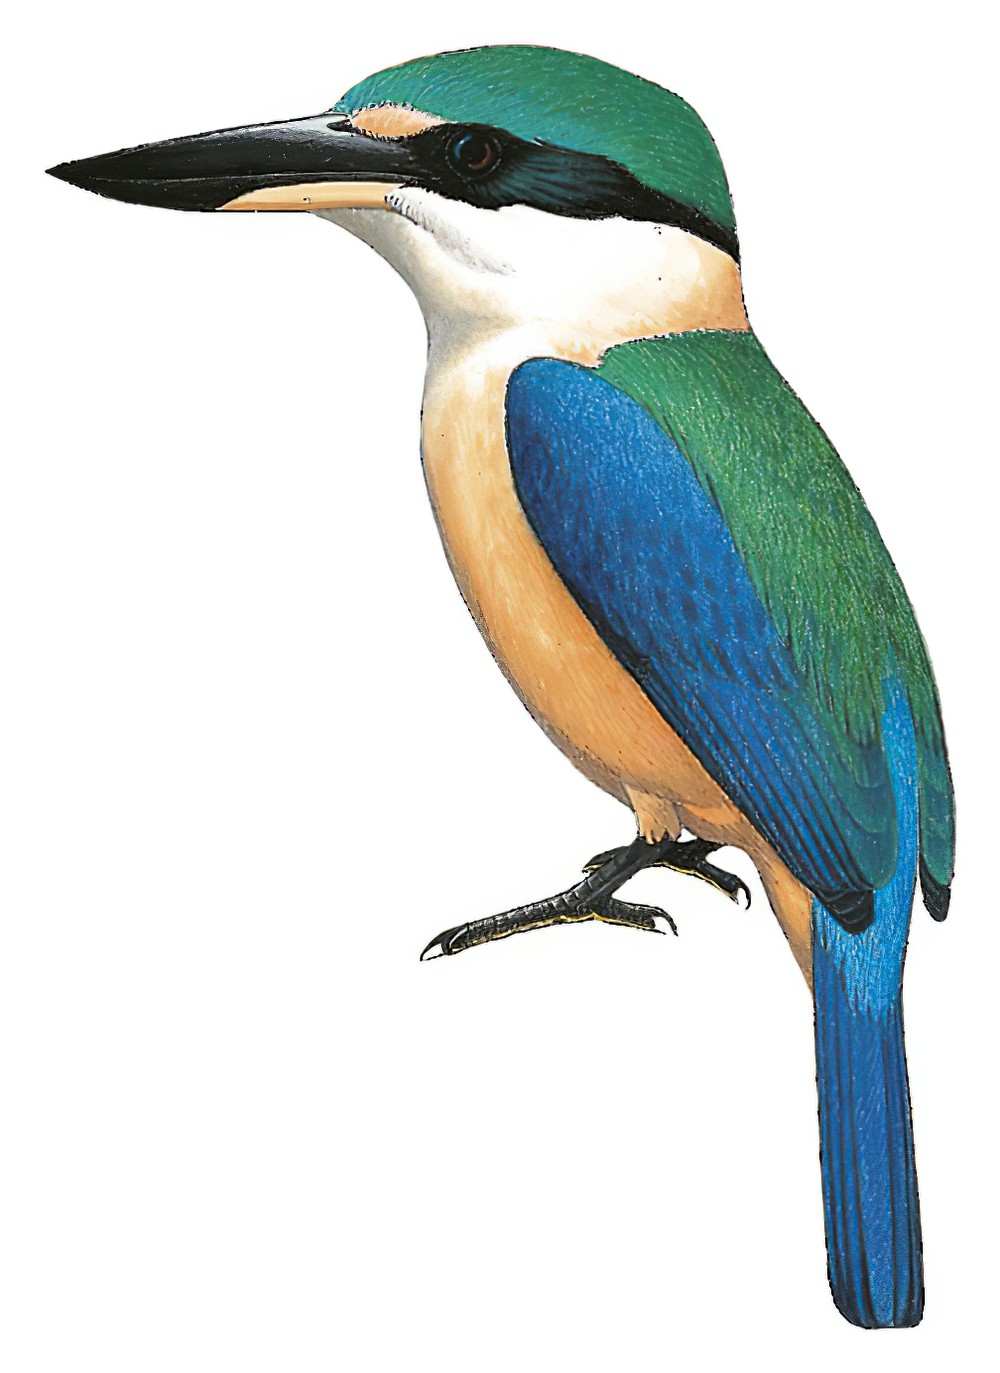 Melanesian Kingfisher / Todiramphus tristrami